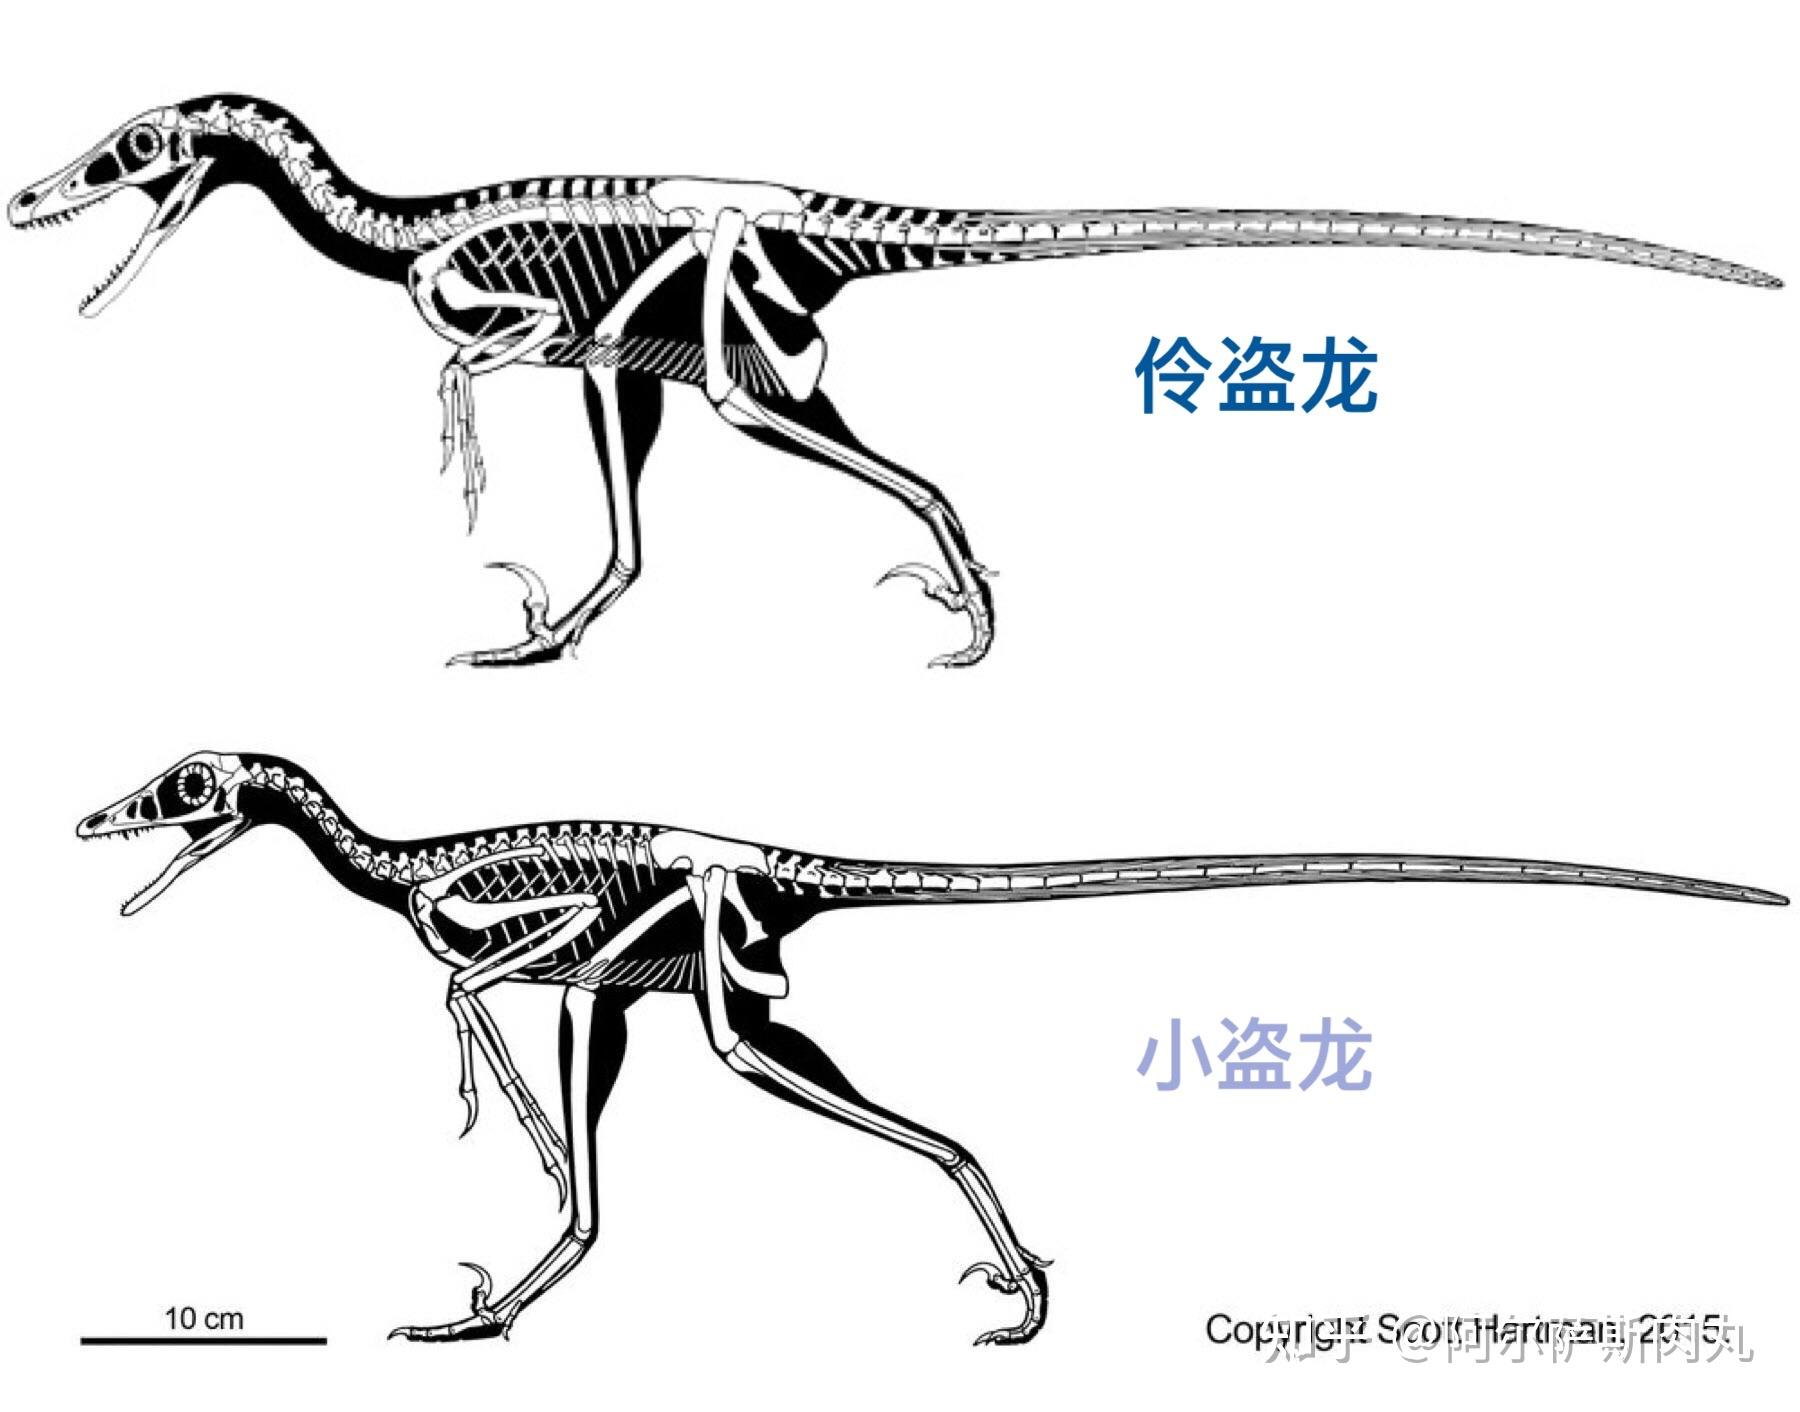 bohaiensis〕模式种渤海舞龙的化石印模标本,它们纤细地骨骼结构显示